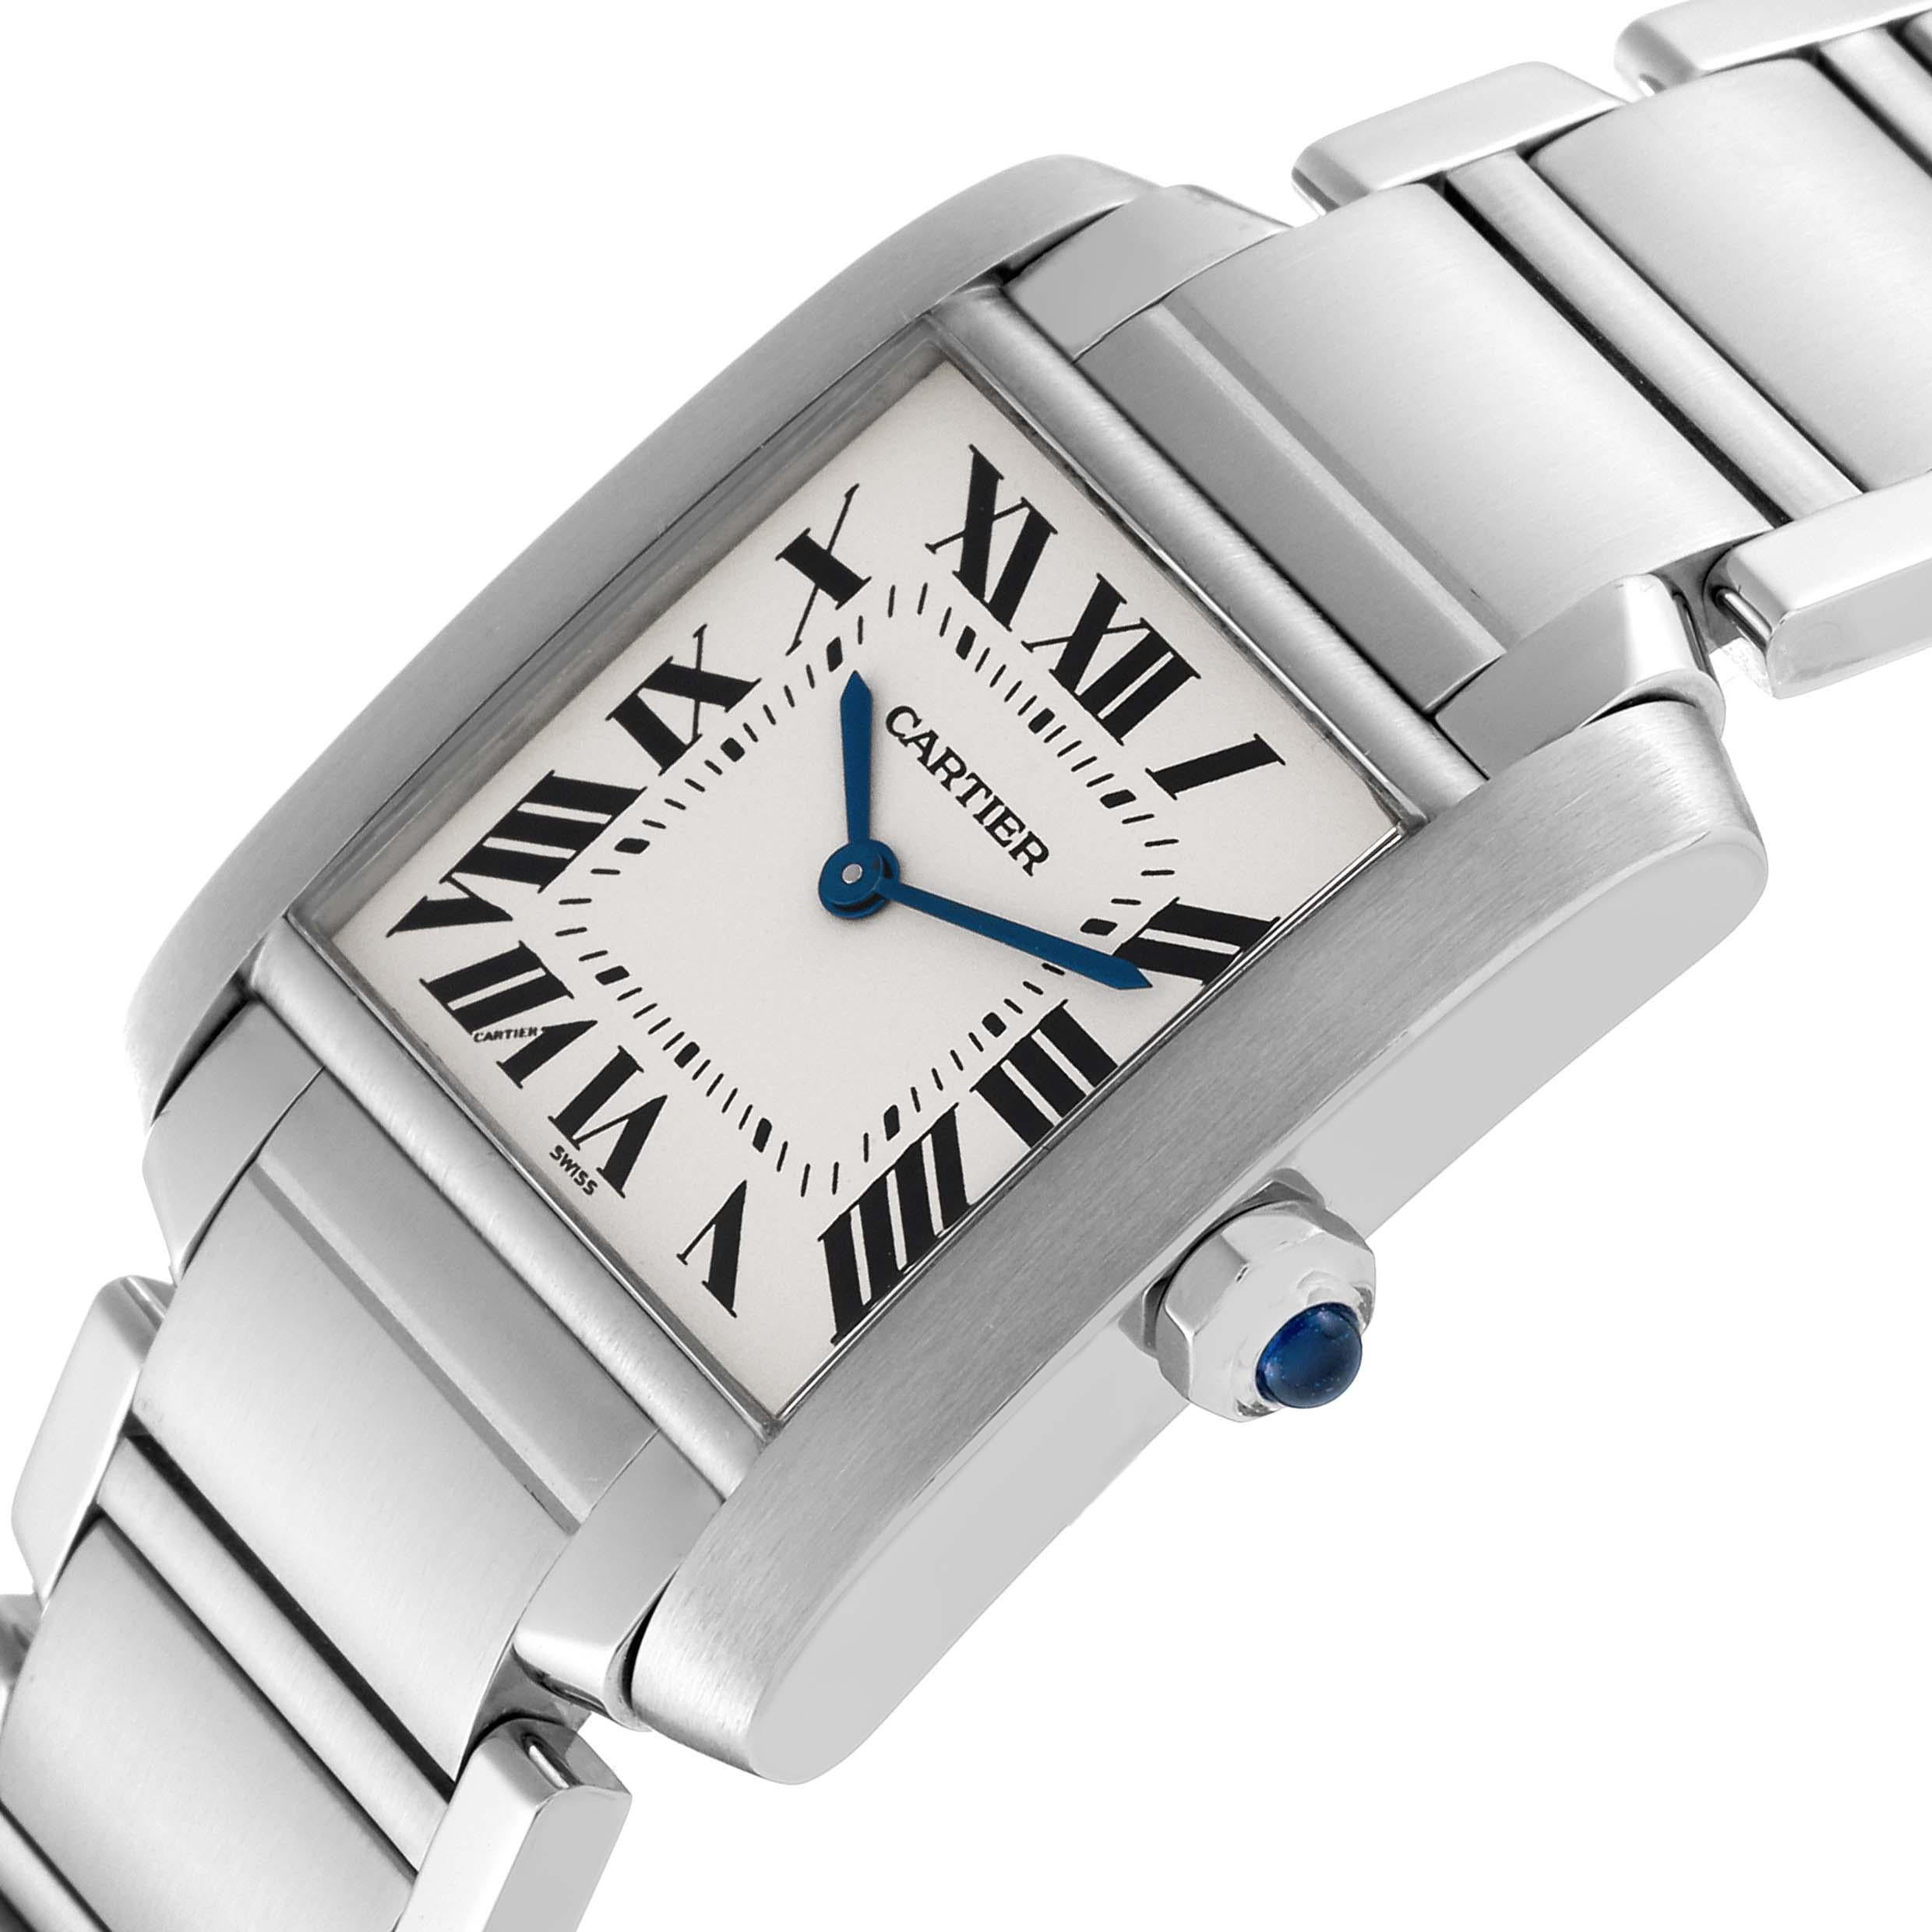 Cartier Tank Francaise Midsize Silver Dial Ladies Watch W51003Q3 2